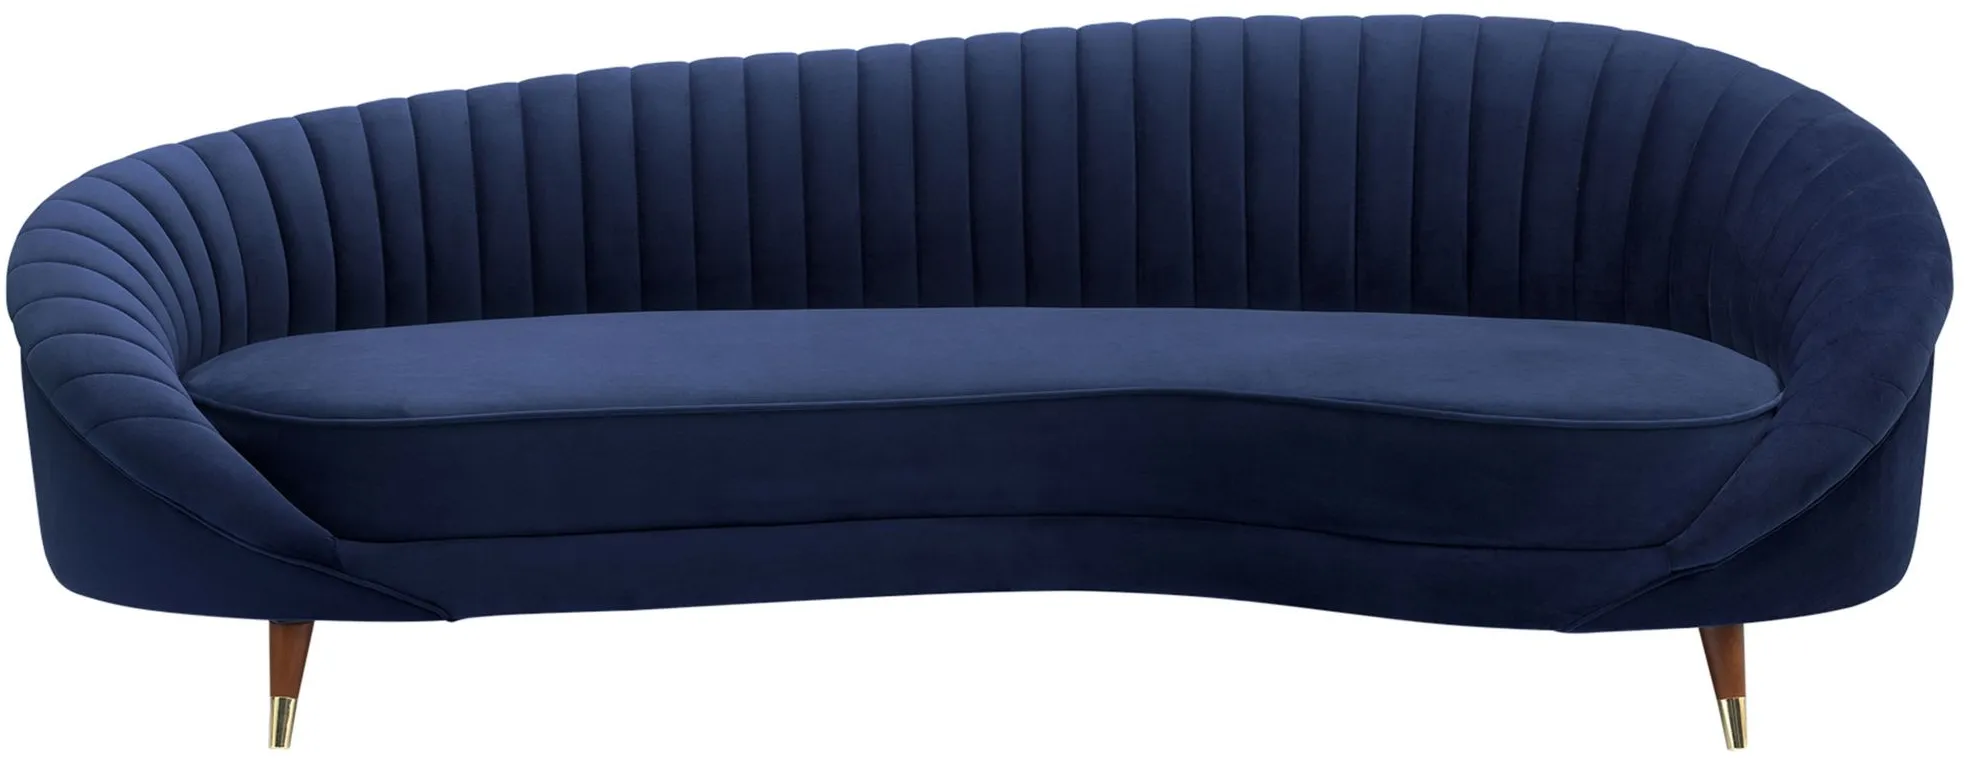 Karisma Sofa in Navy Blue by Armen Living